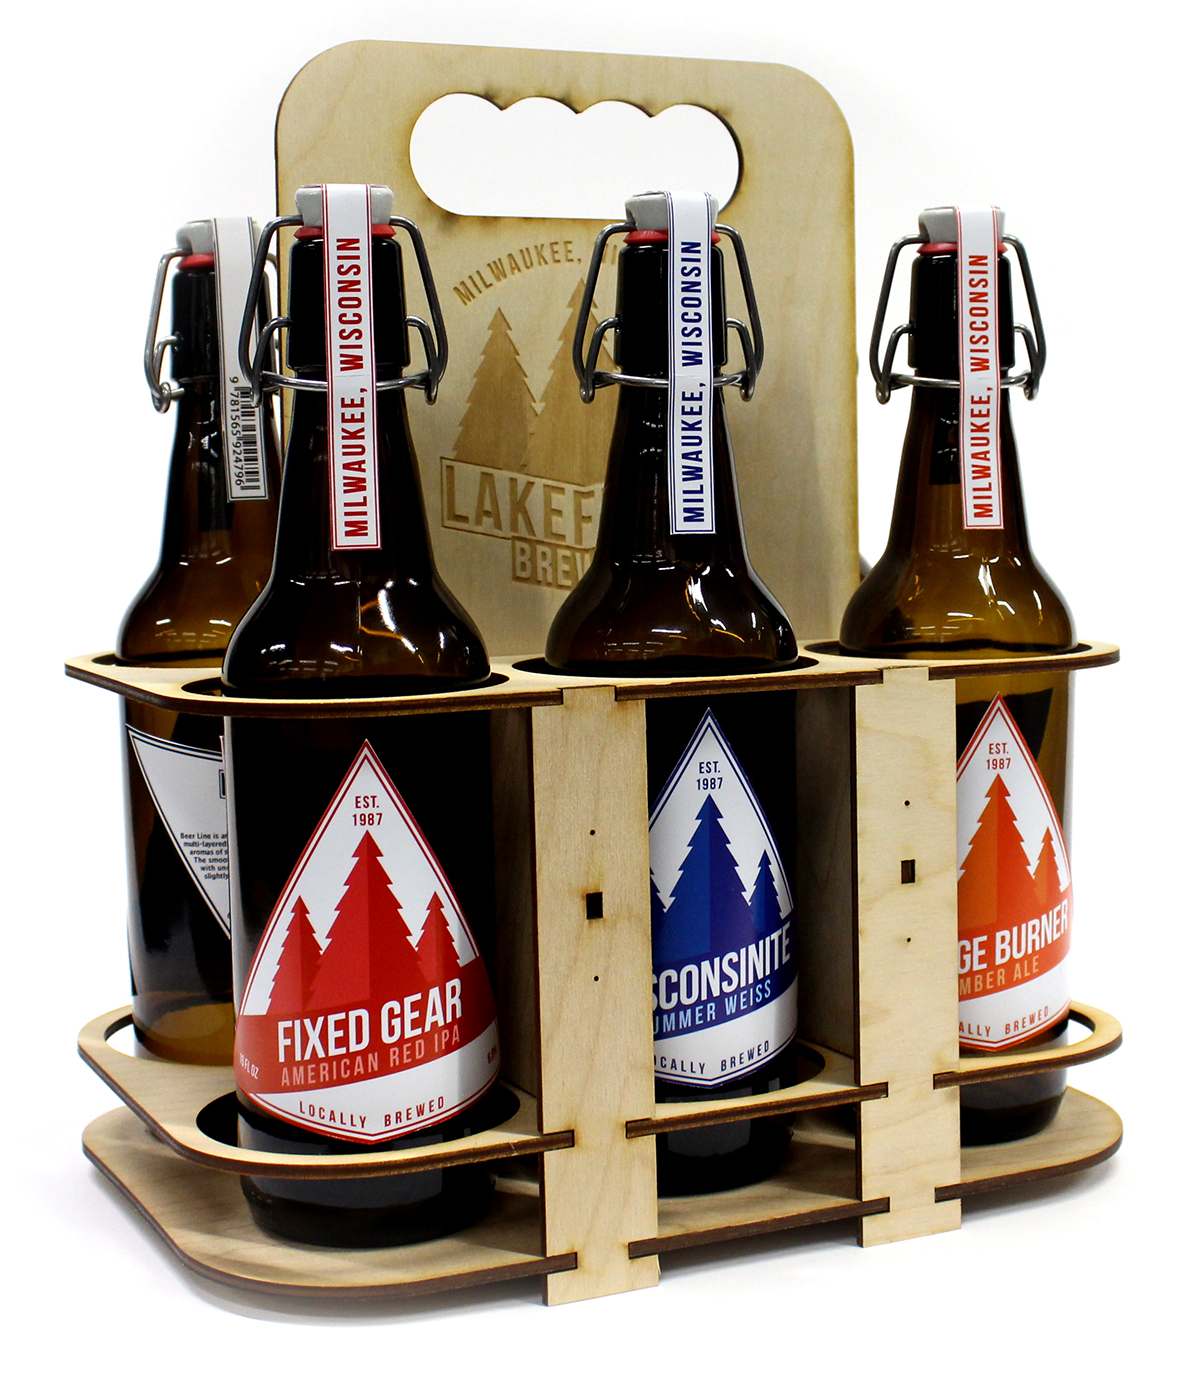 Adobe Portfolio lakefront brewery Lakefront Brewery Rebrand beer alcohol bottles labels holder